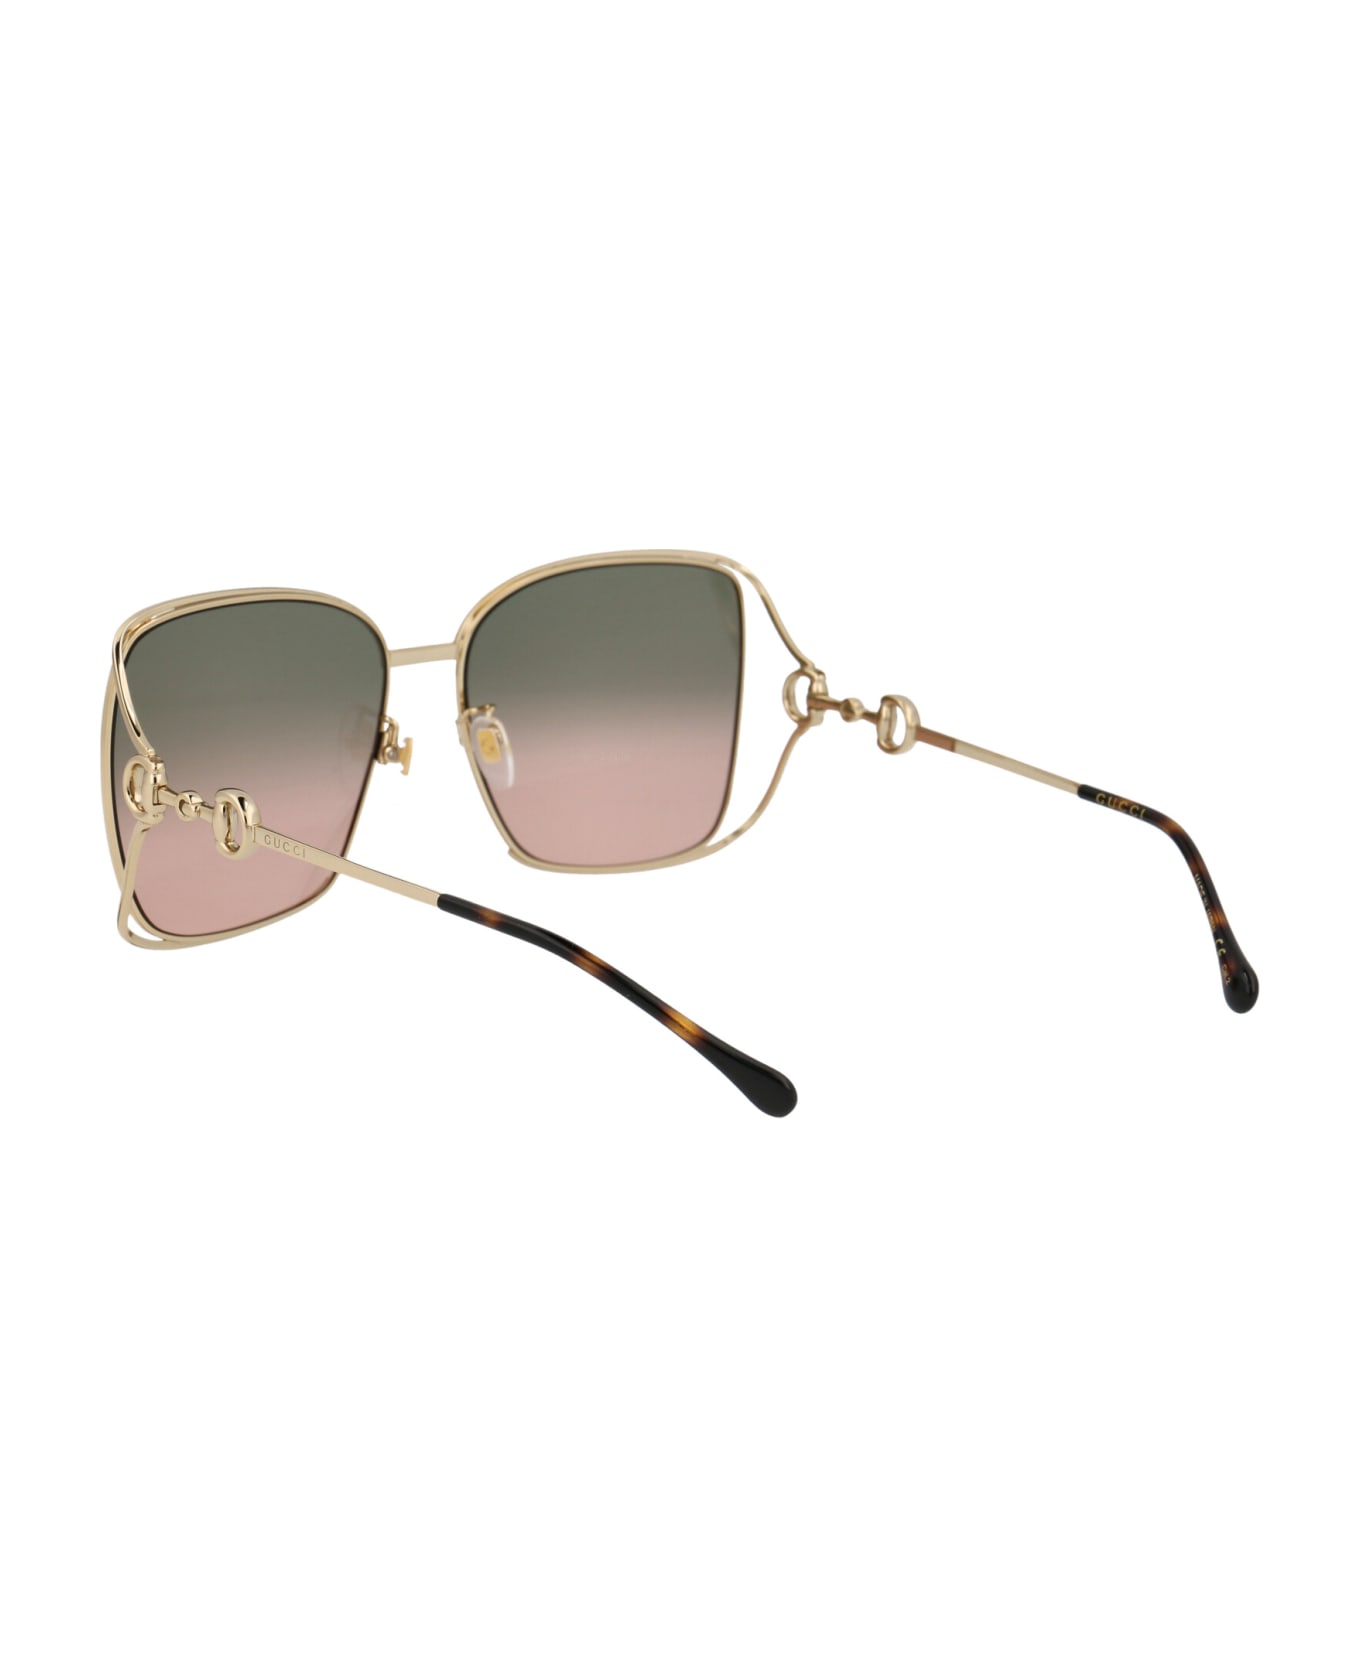 Gucci Eyewear Gg1020s Sunglasses - 001 GOLD GOLD GREEN